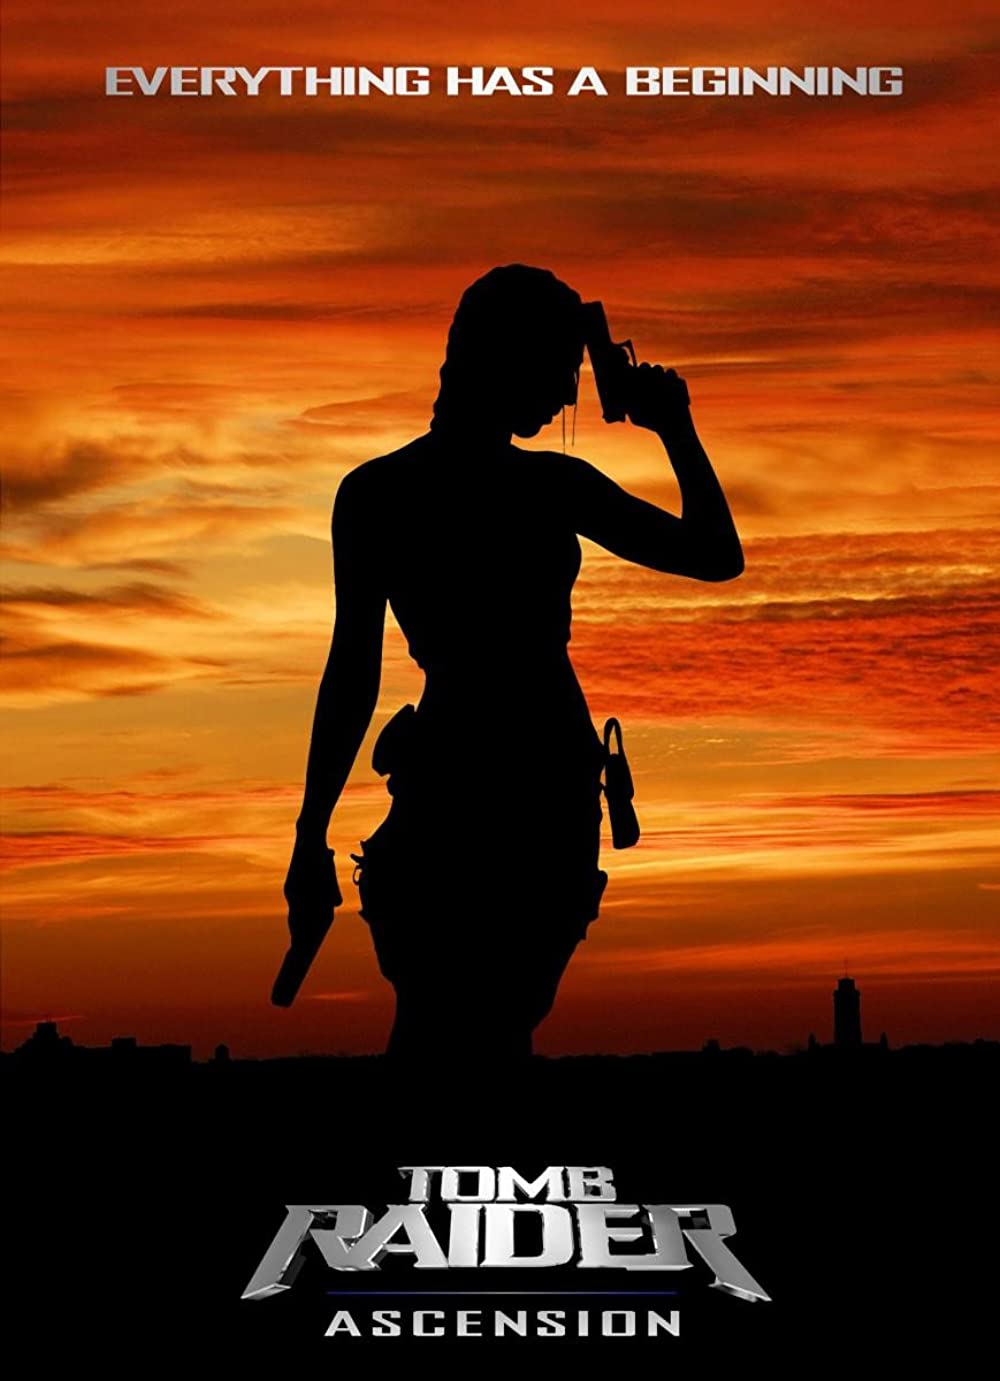 Download Tomb Raider Ascension Movie | Tomb Raider Ascension Hd, Dvd